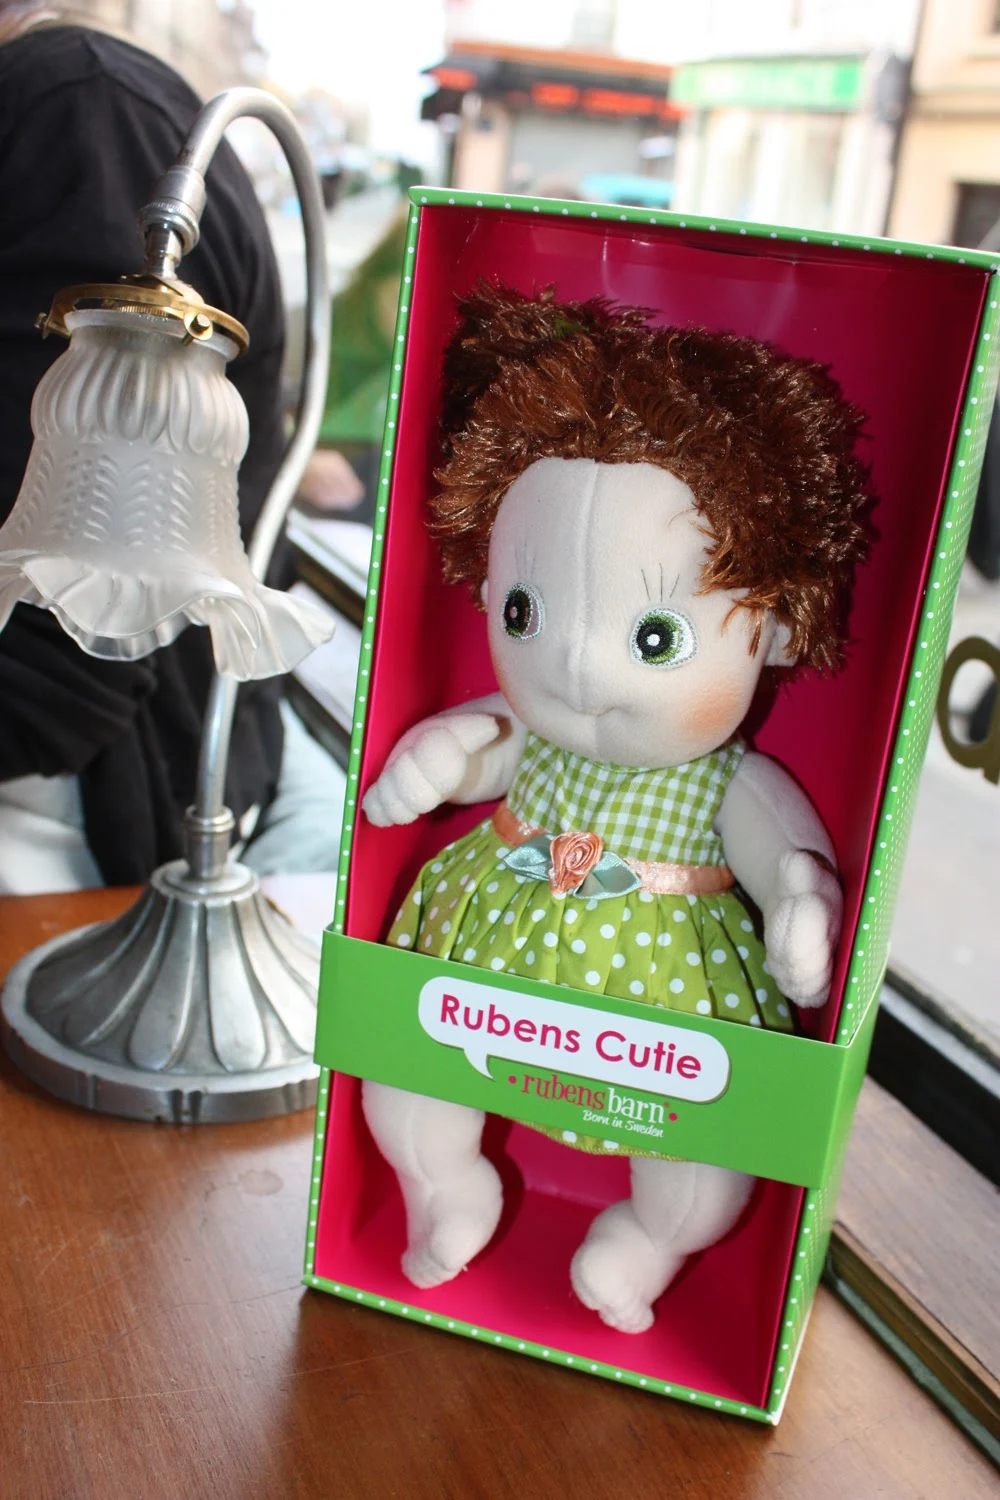 Karin collection Rubens Cutie